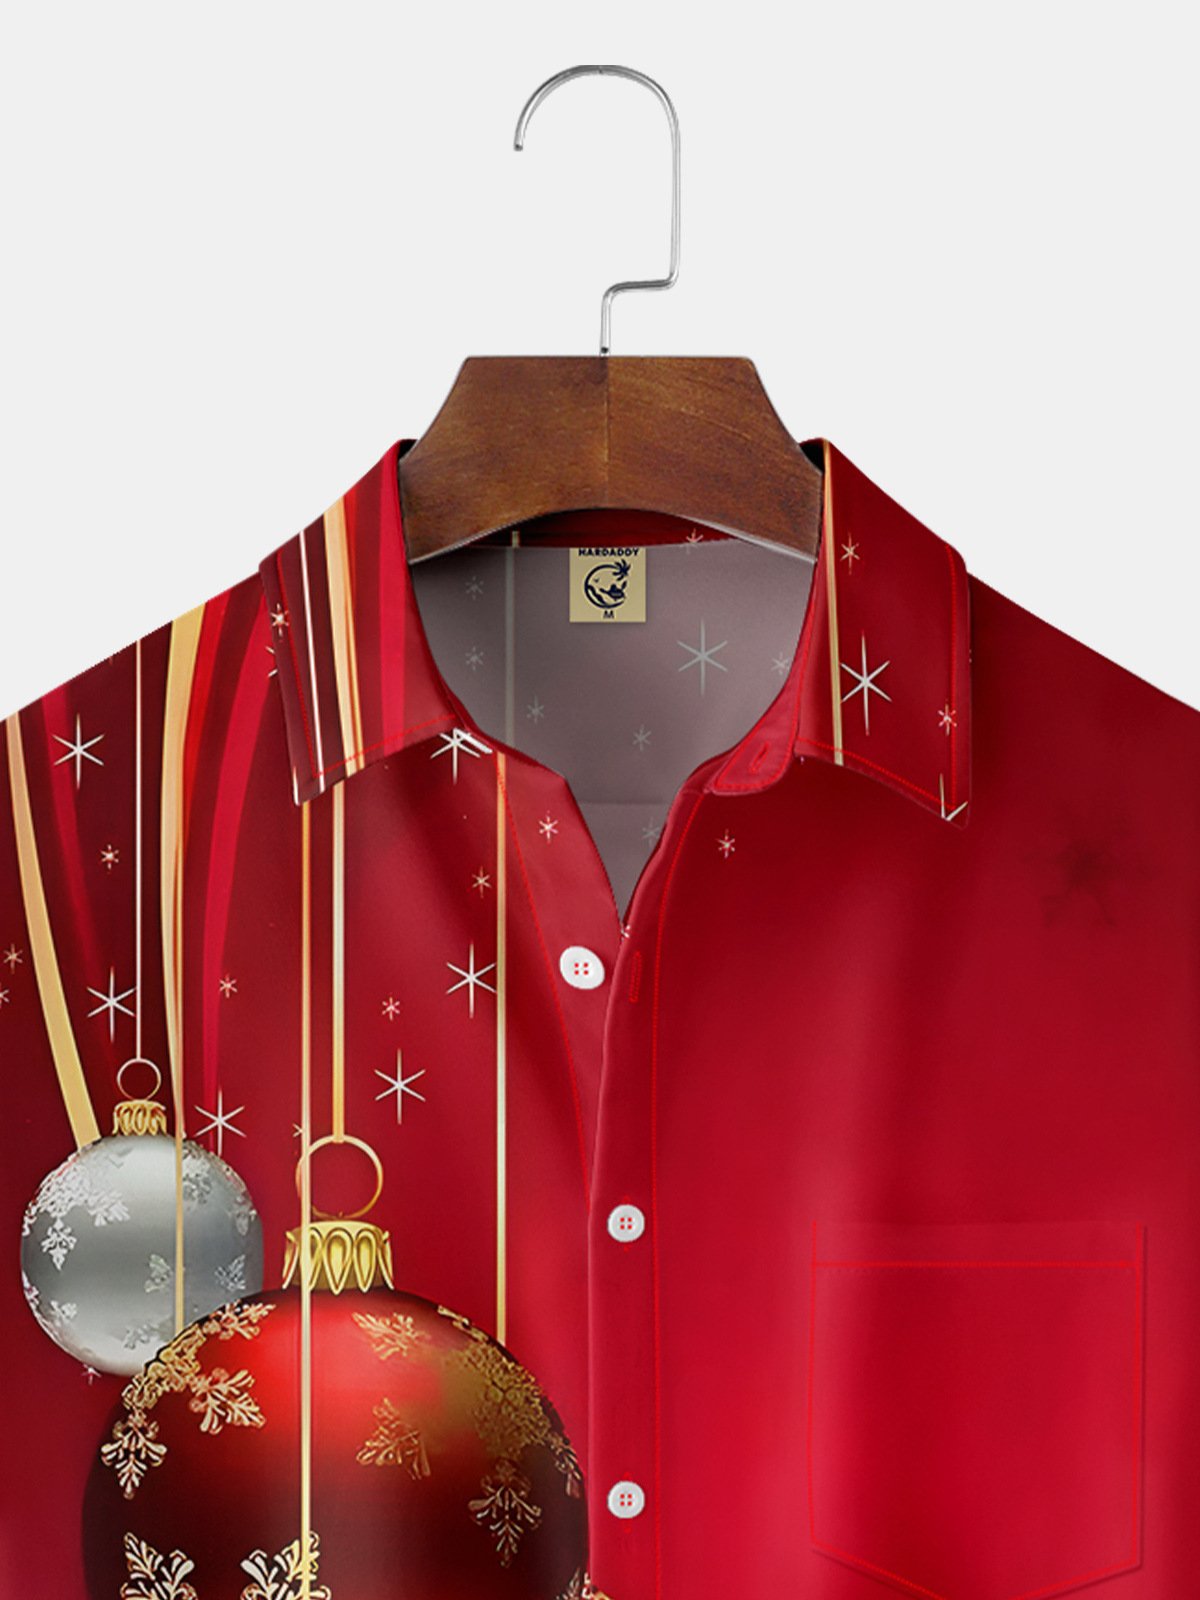 Hardaddy Christmas Decorated Chest Pocket Short Sleeve Casual Shirt